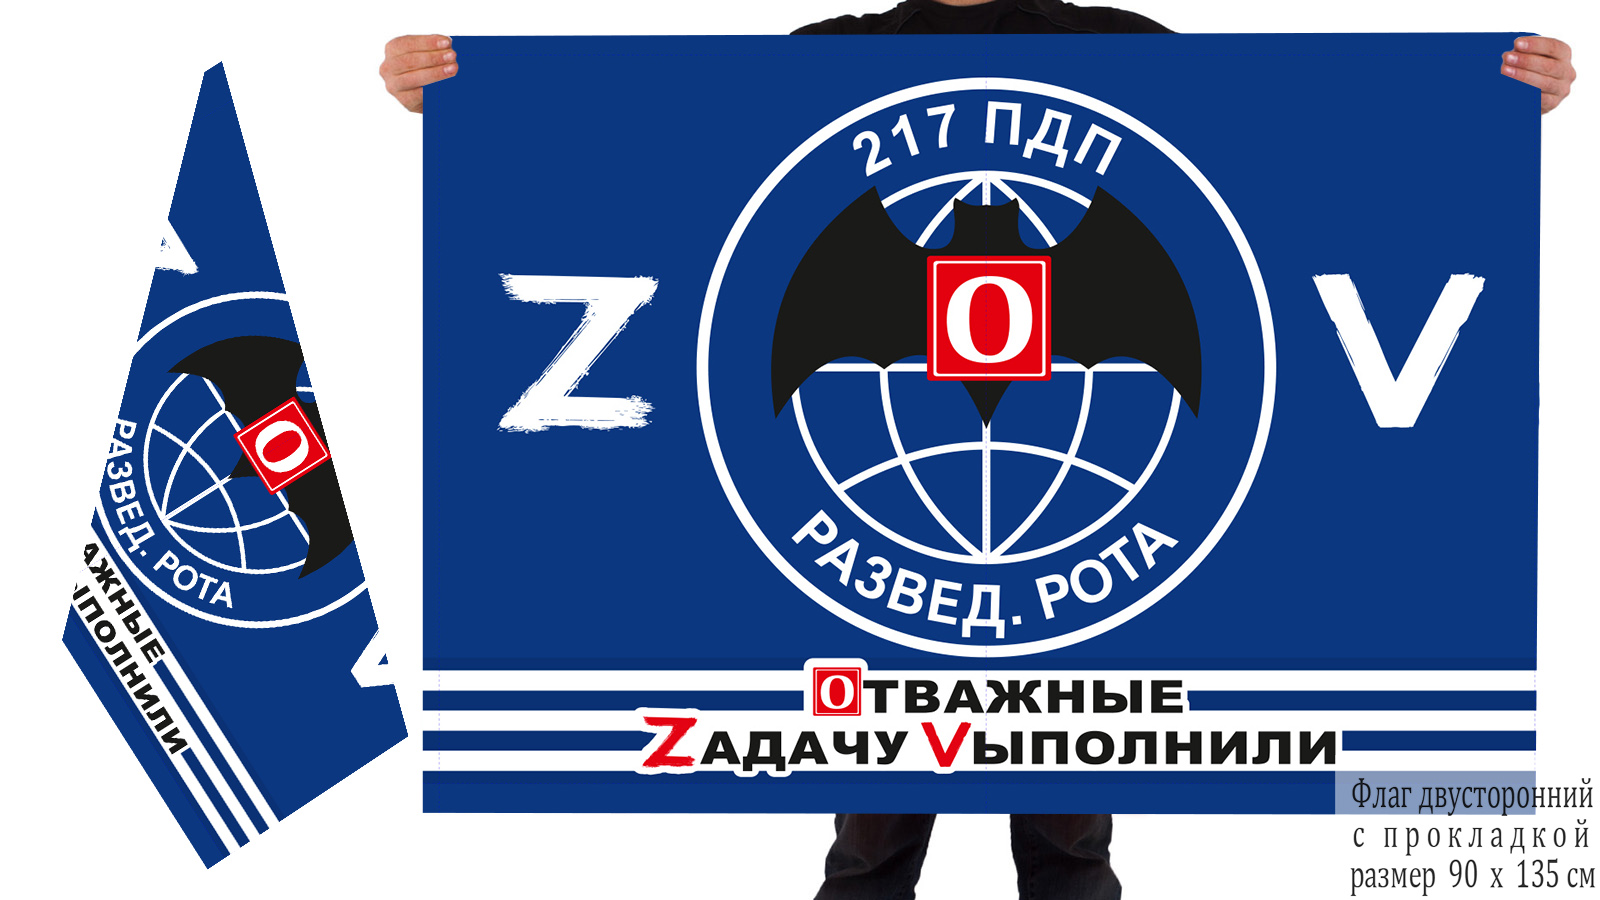 Двусторонний флаг разведроты 217 ПДП "Спецоперация Z"